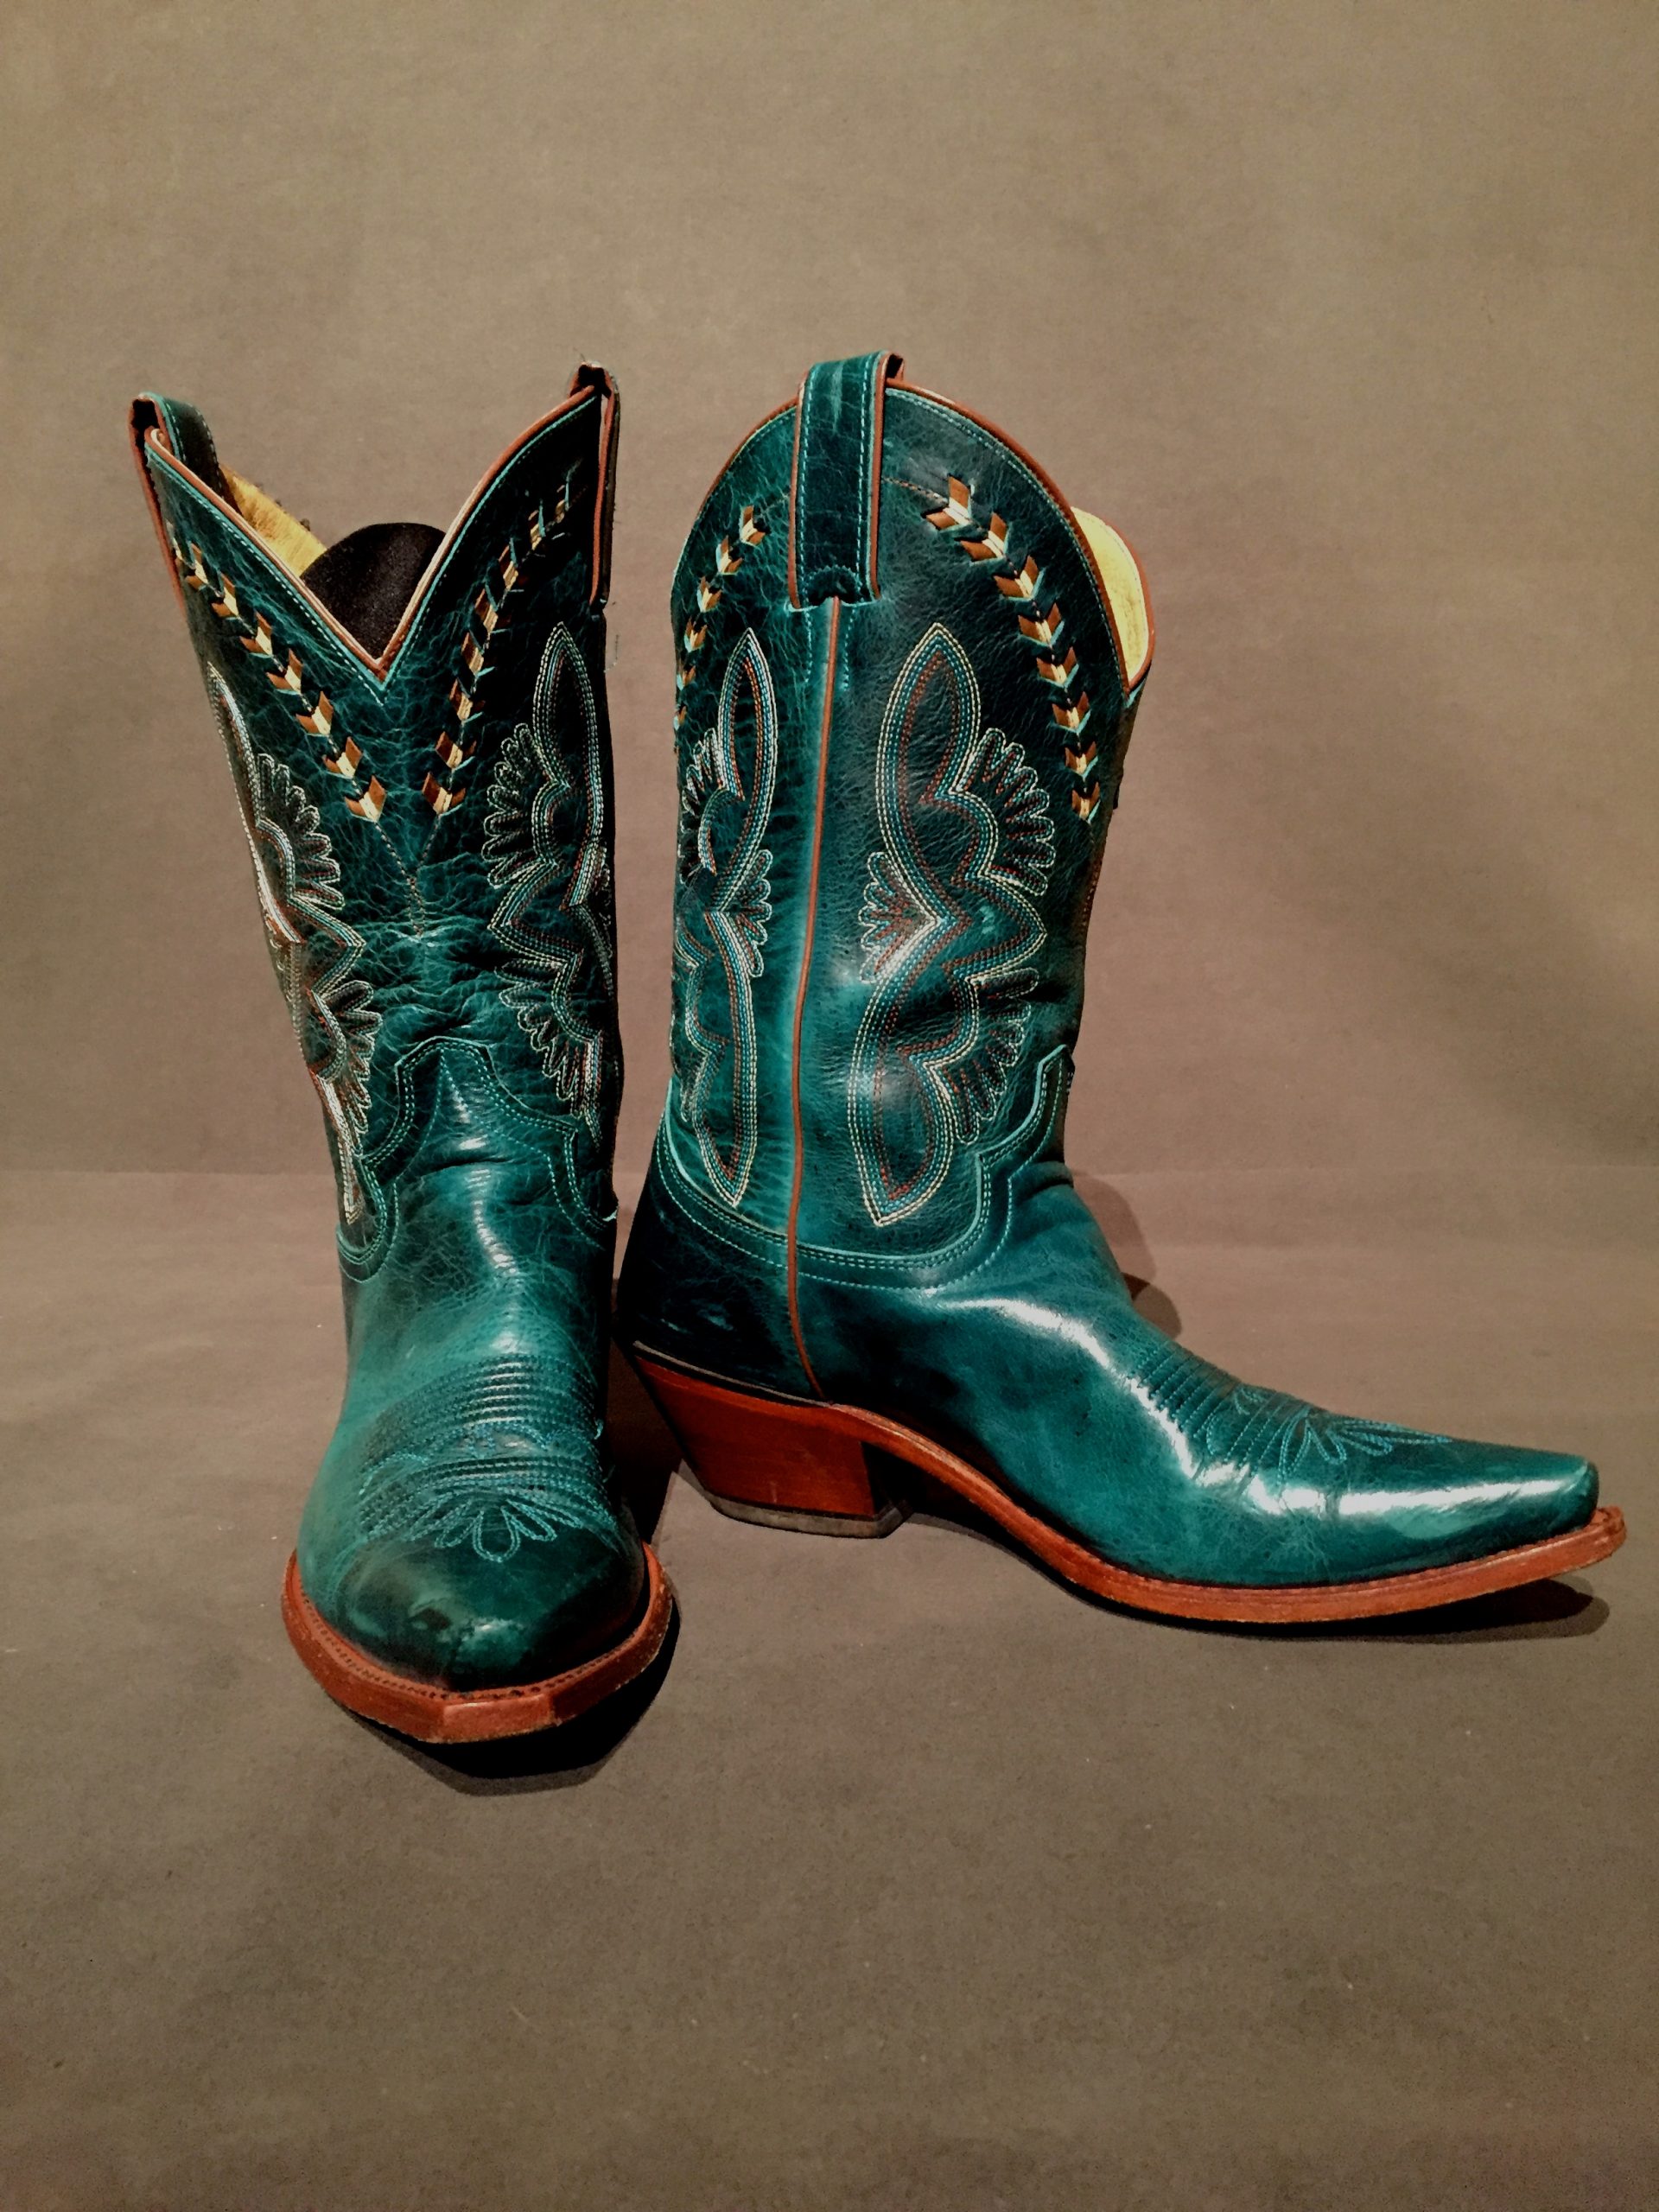 Teal cowboy boot